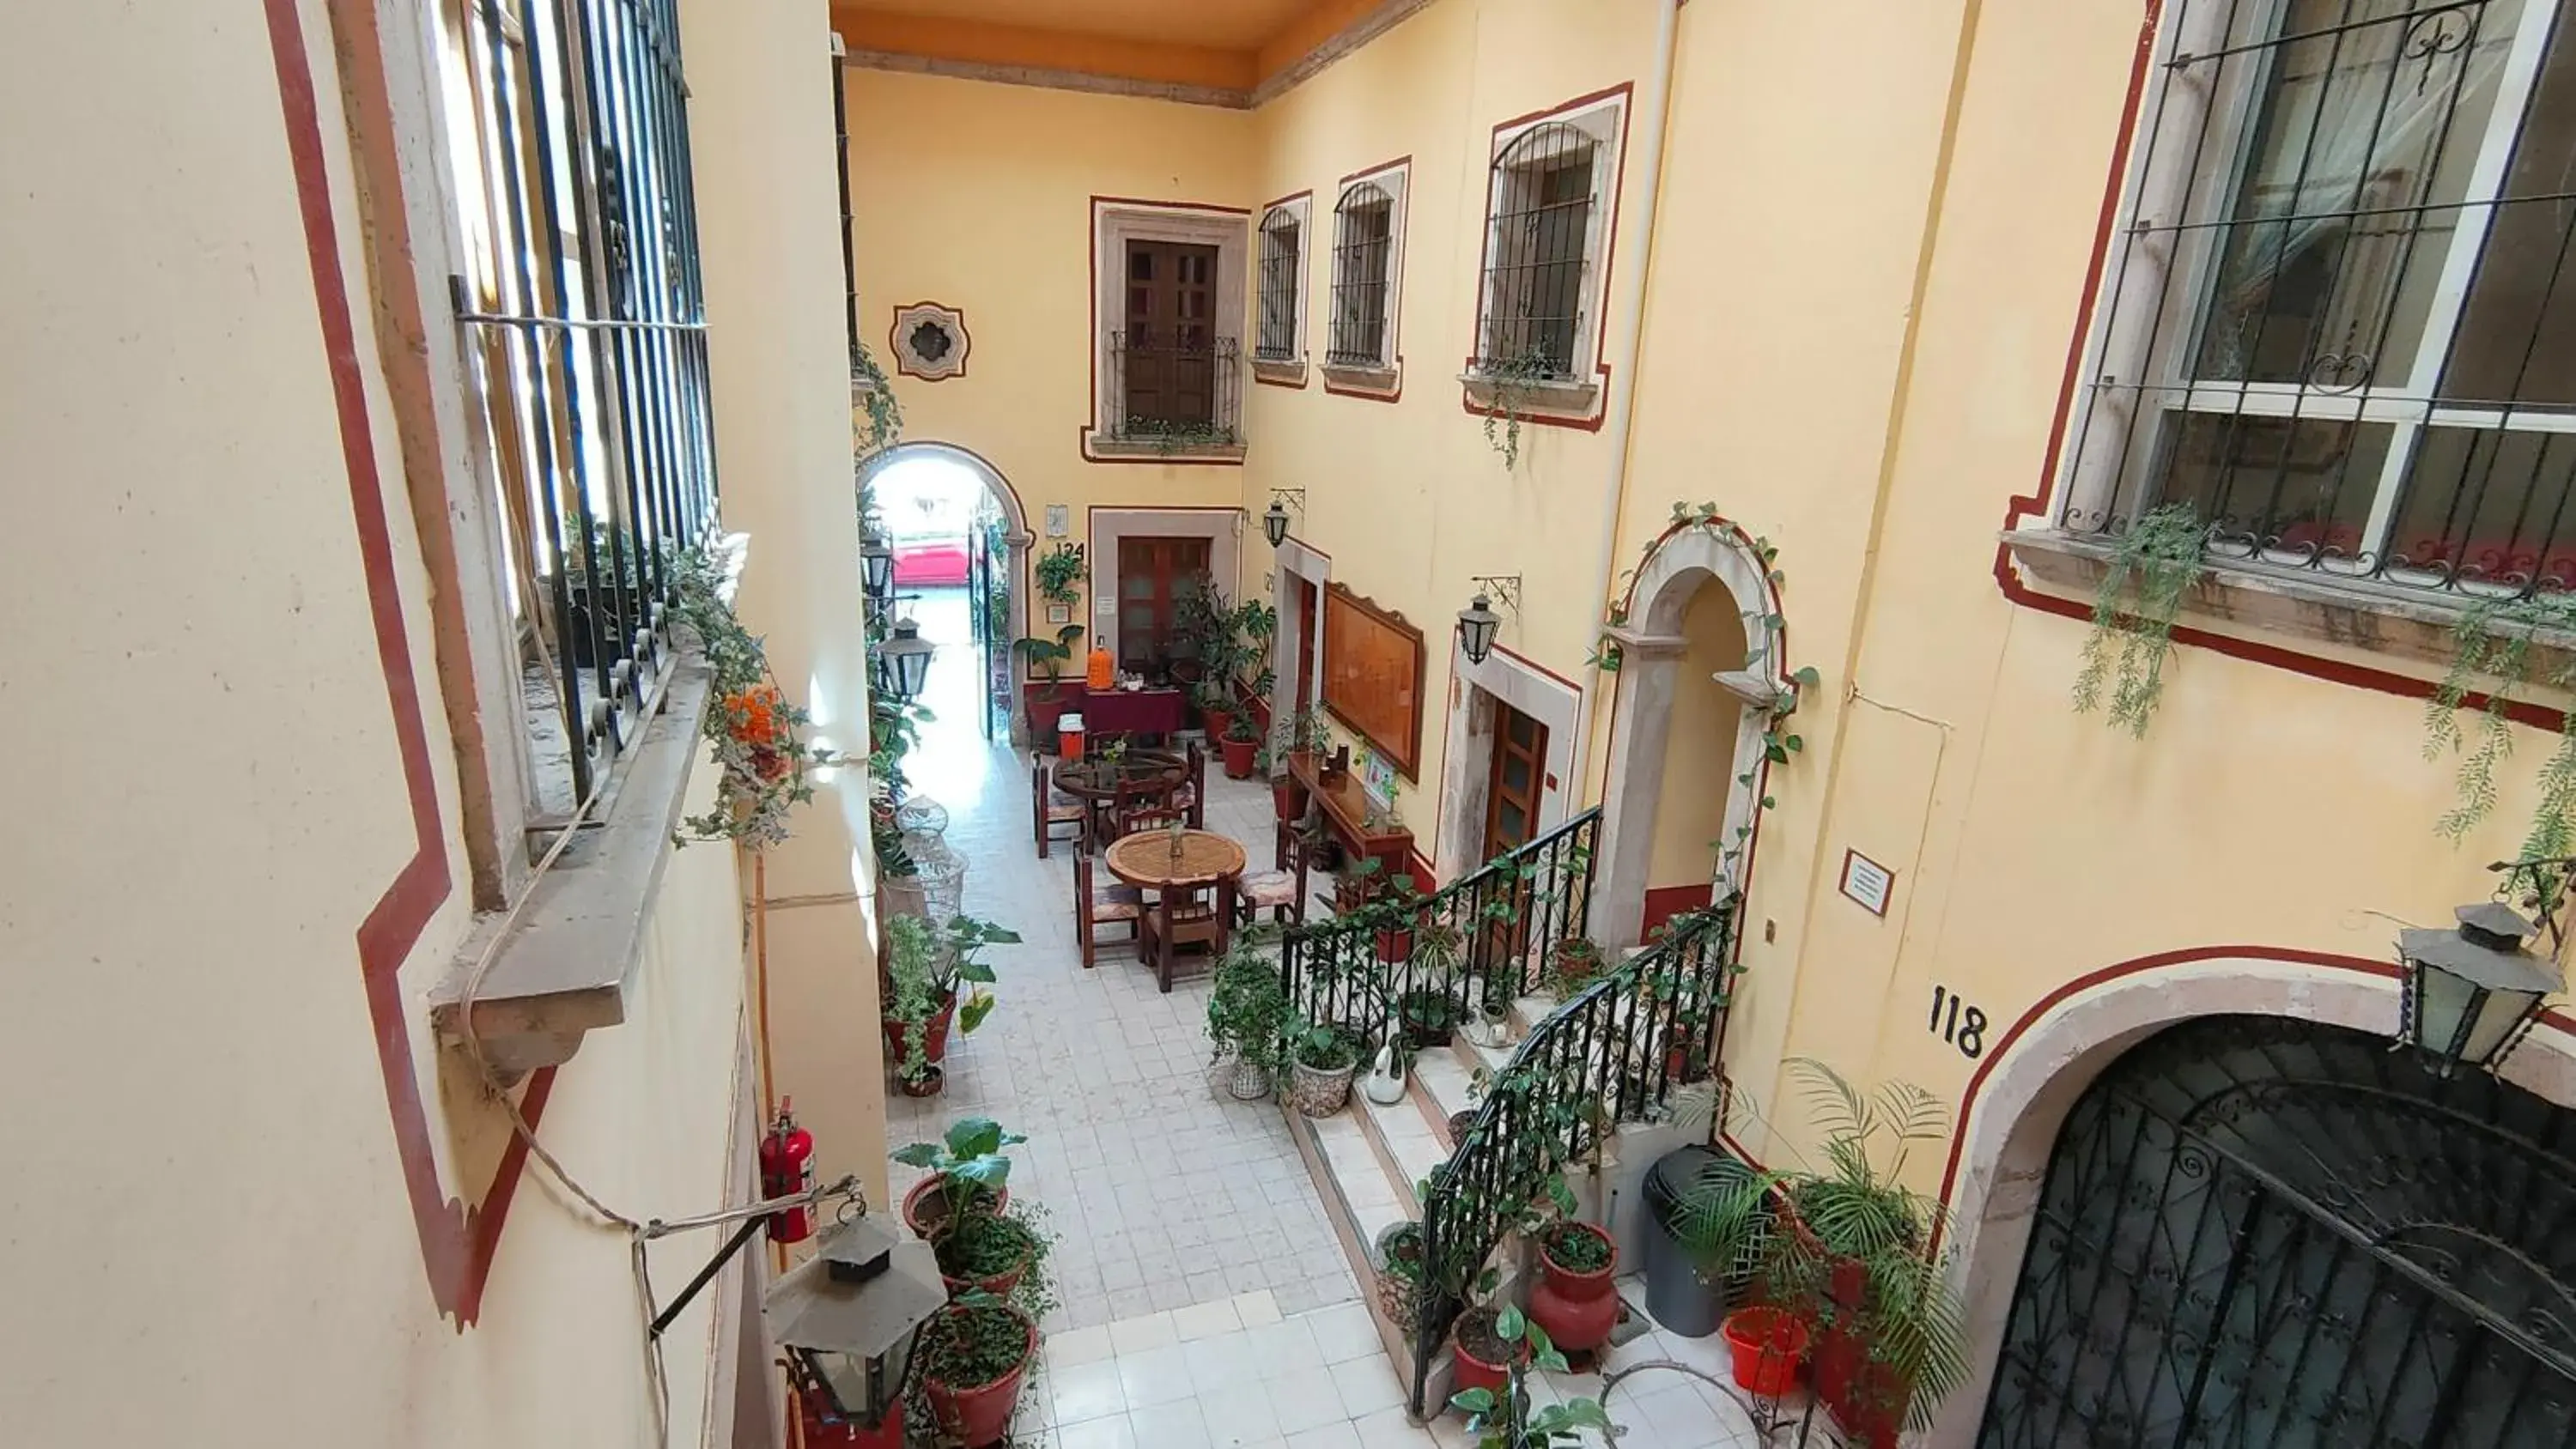 Area and facilities in OYO Posada Santa Cecilia, Jerez Zacatecas